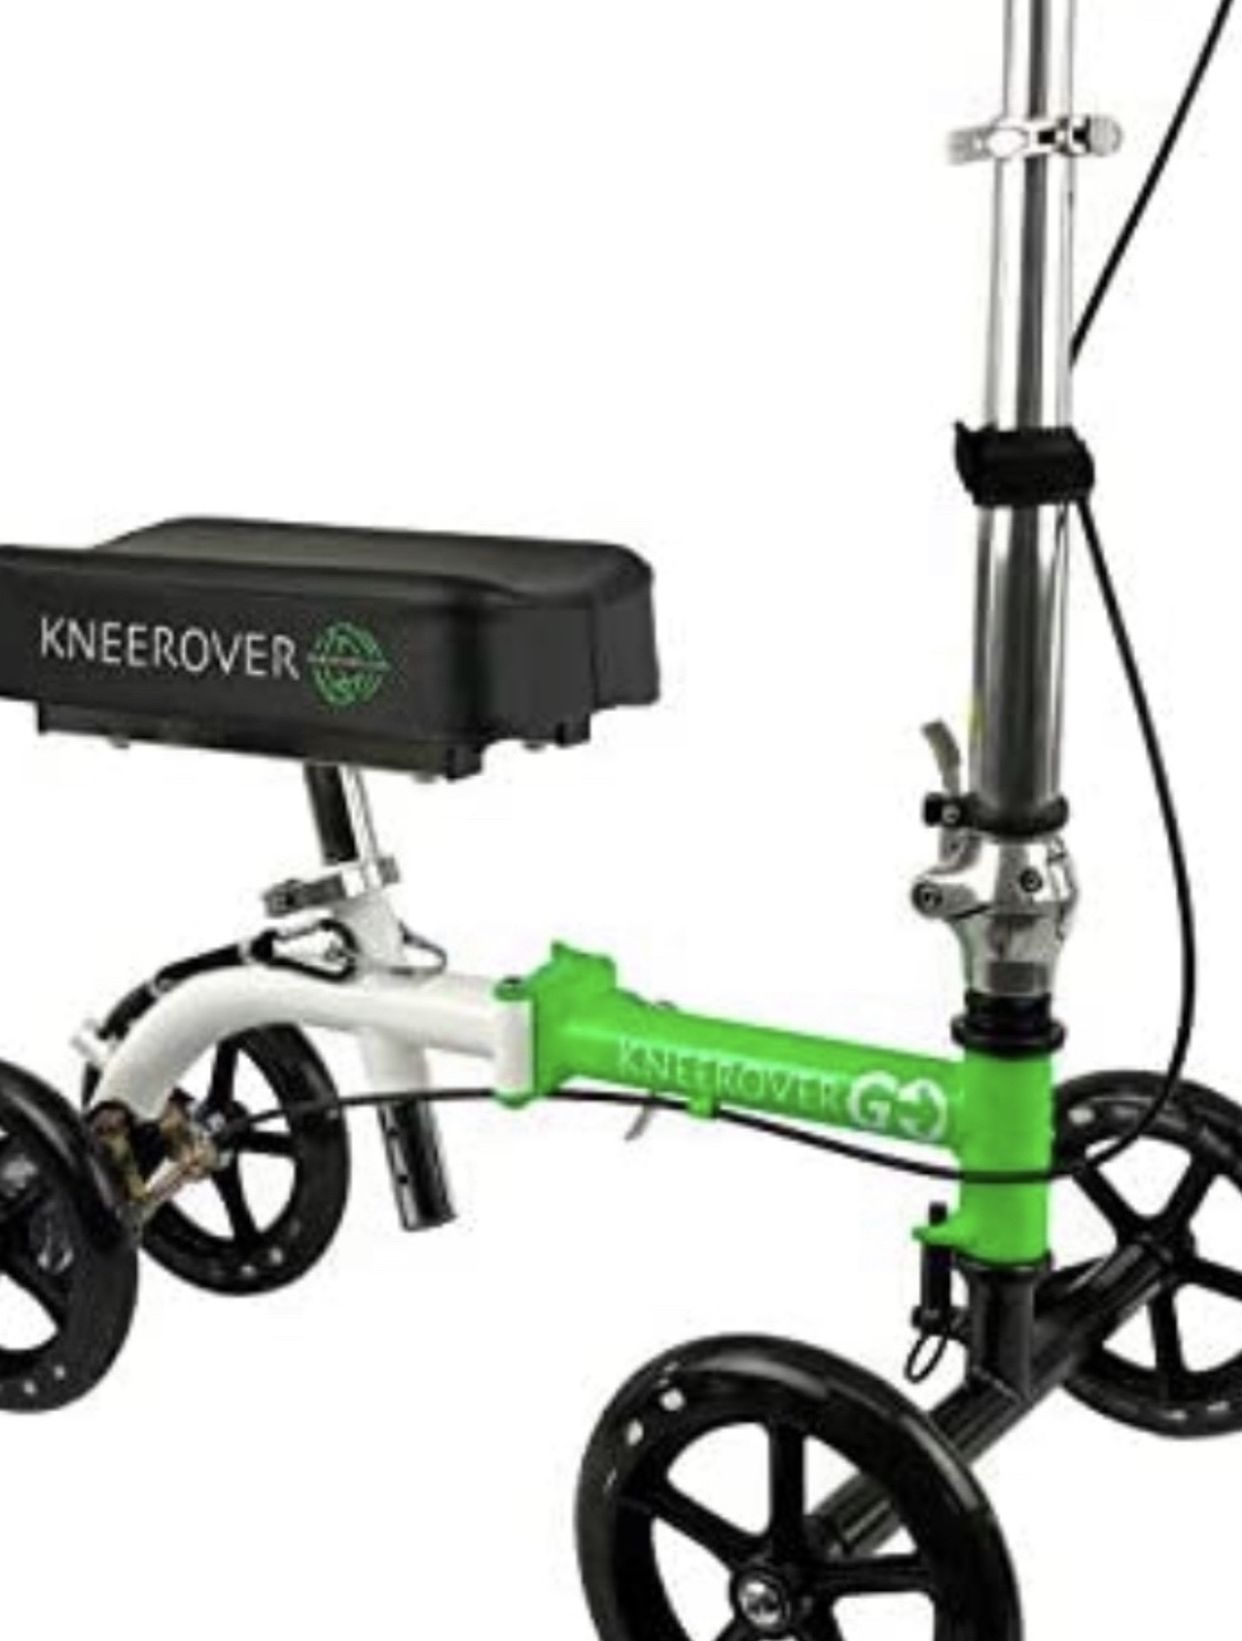 KneeRover - GO Knee Scooter - Medical Supply -Knee Walker Crutches Alternative